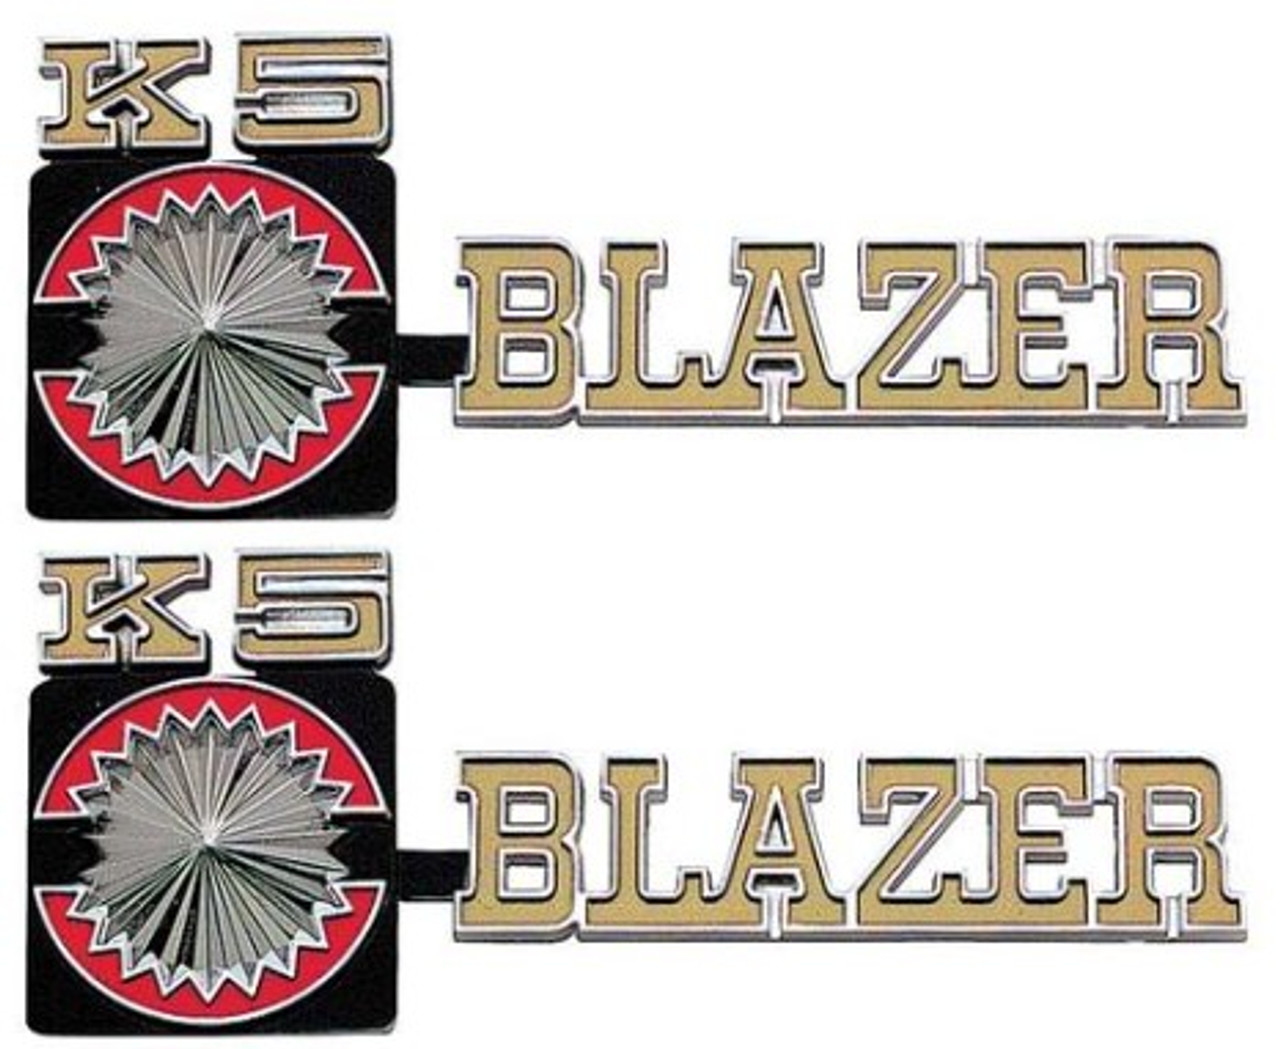 K5 Blazer Fender Emblem, Pr. Fits 1975-80 Chevy Blazer. 4 Wheel Drive